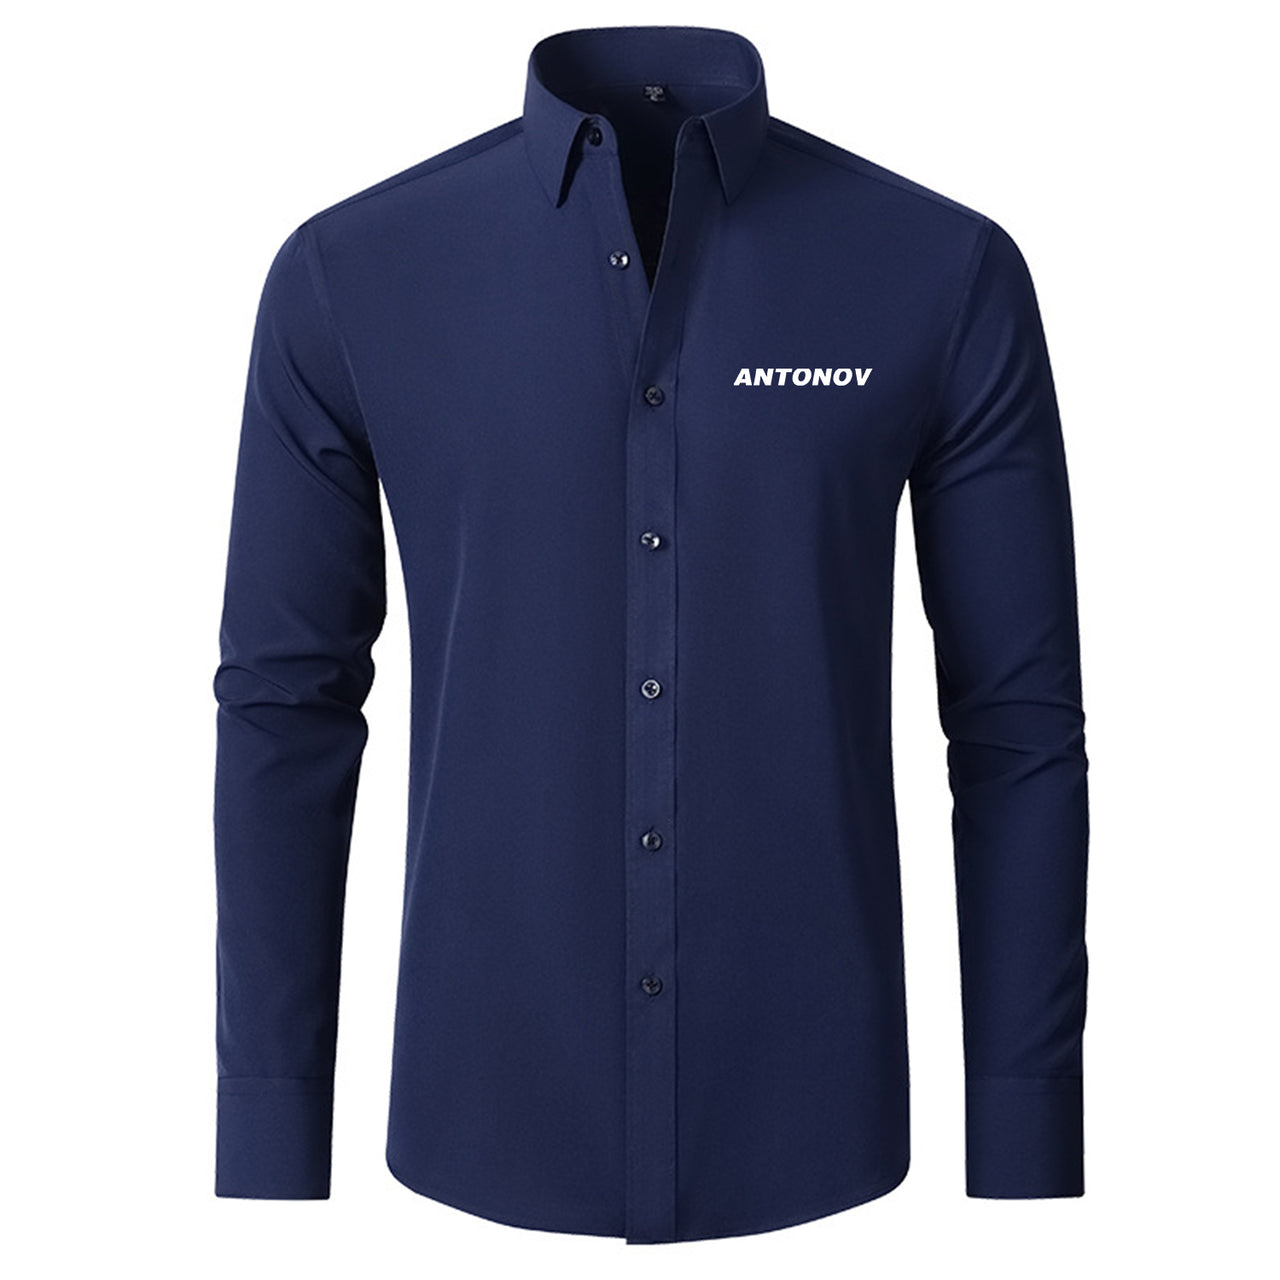 Antonov & Text Designed Long Sleeve Shirts